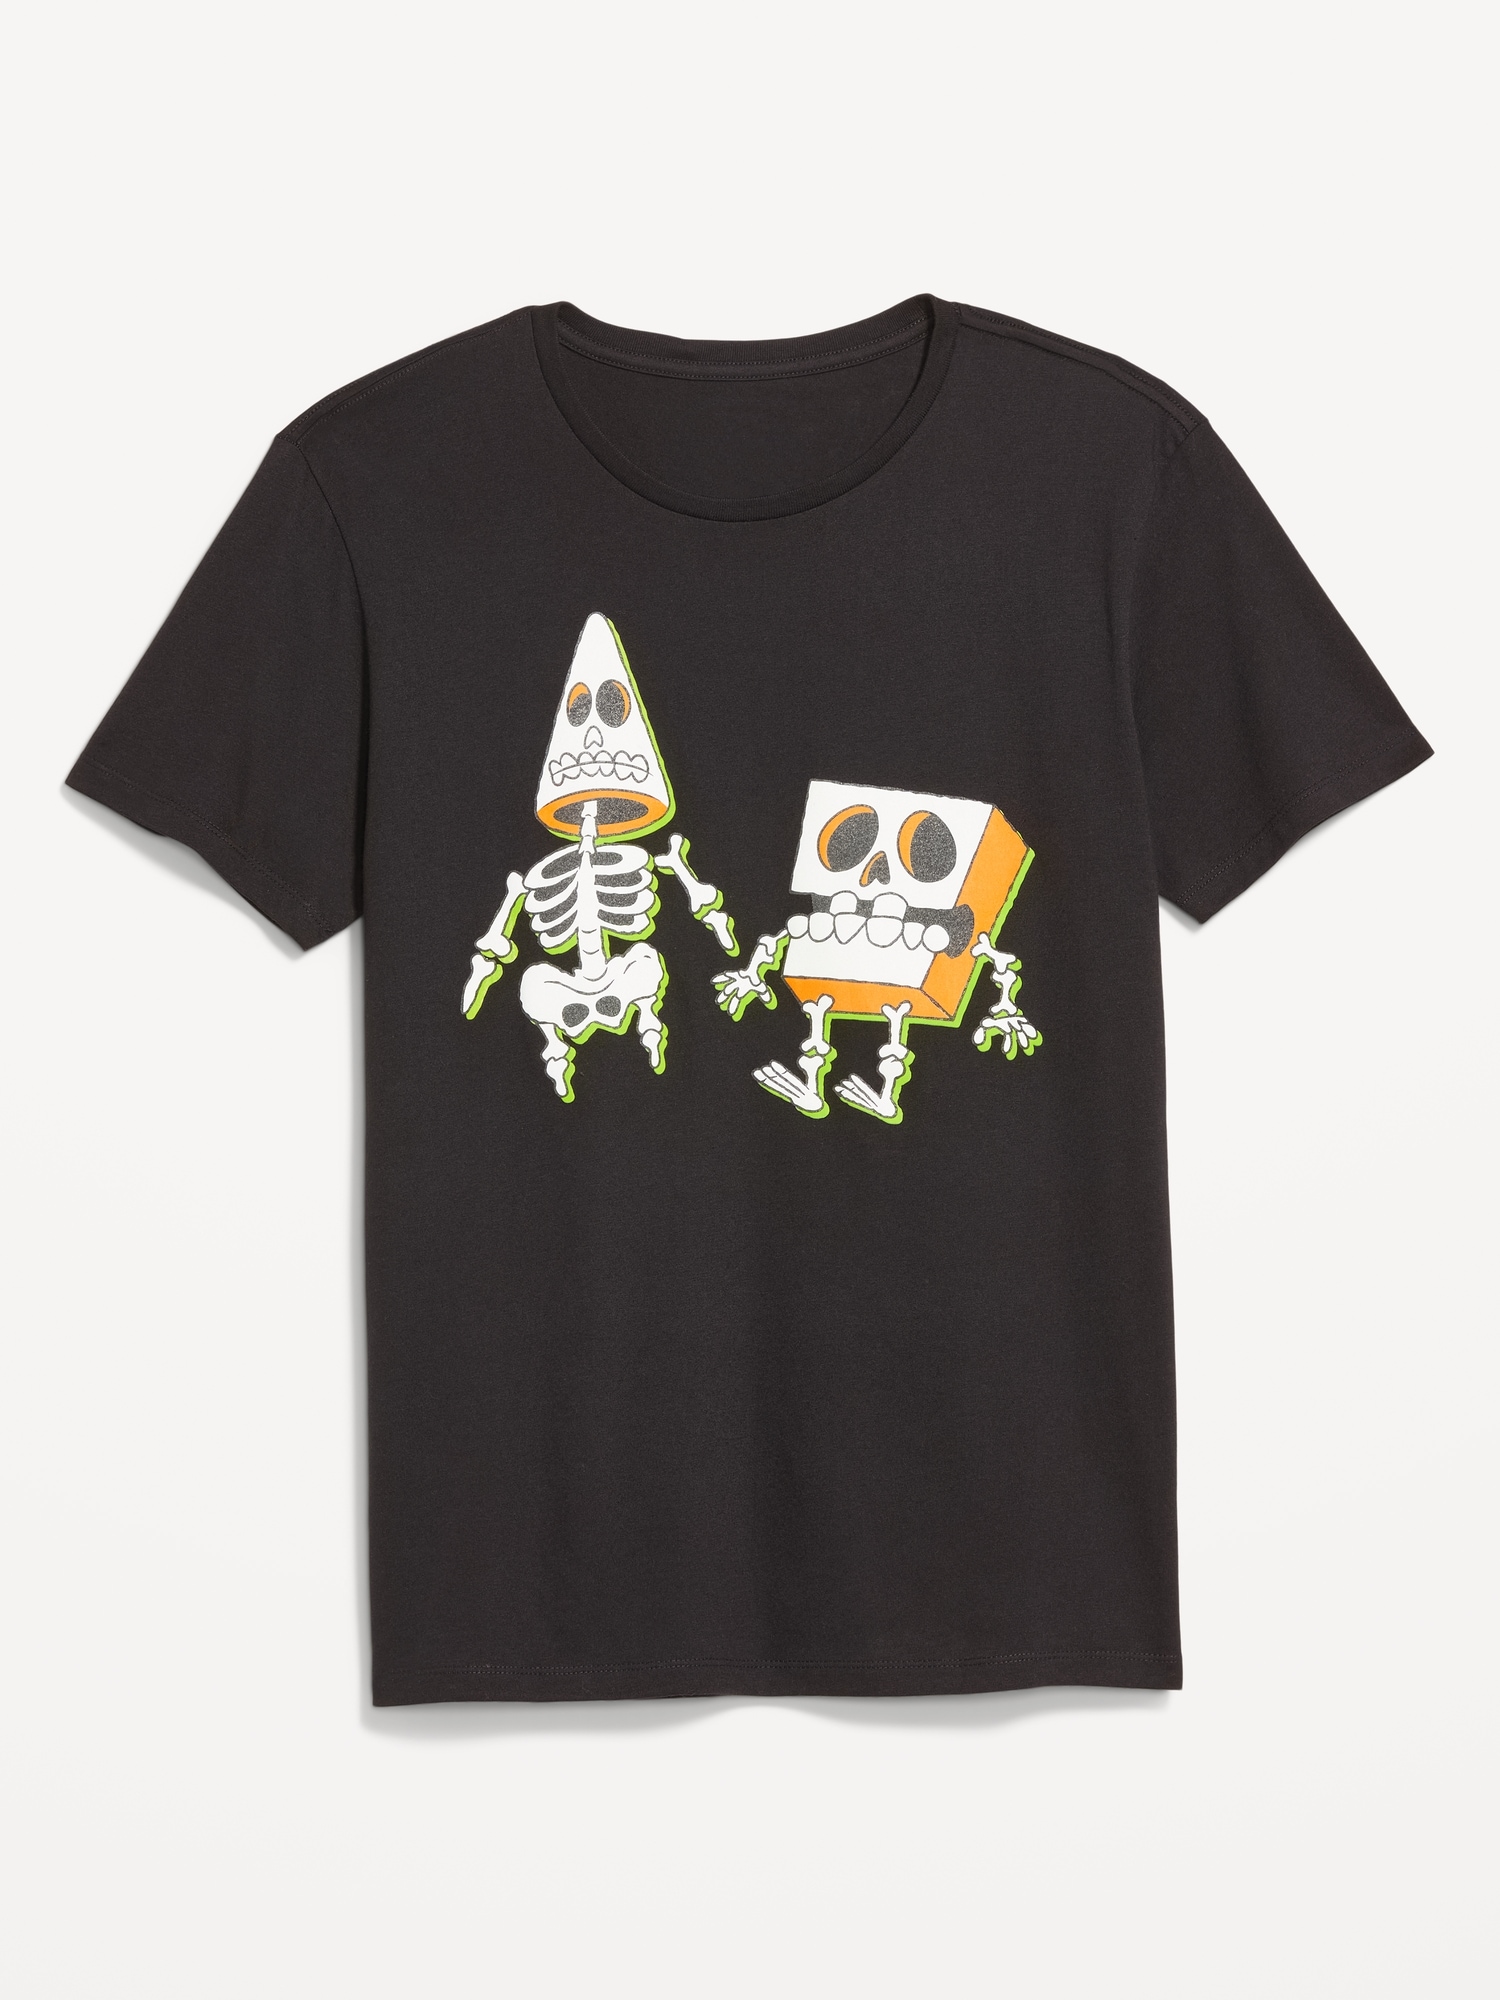 SpongeBob SquarePants Halloween T-Shirt